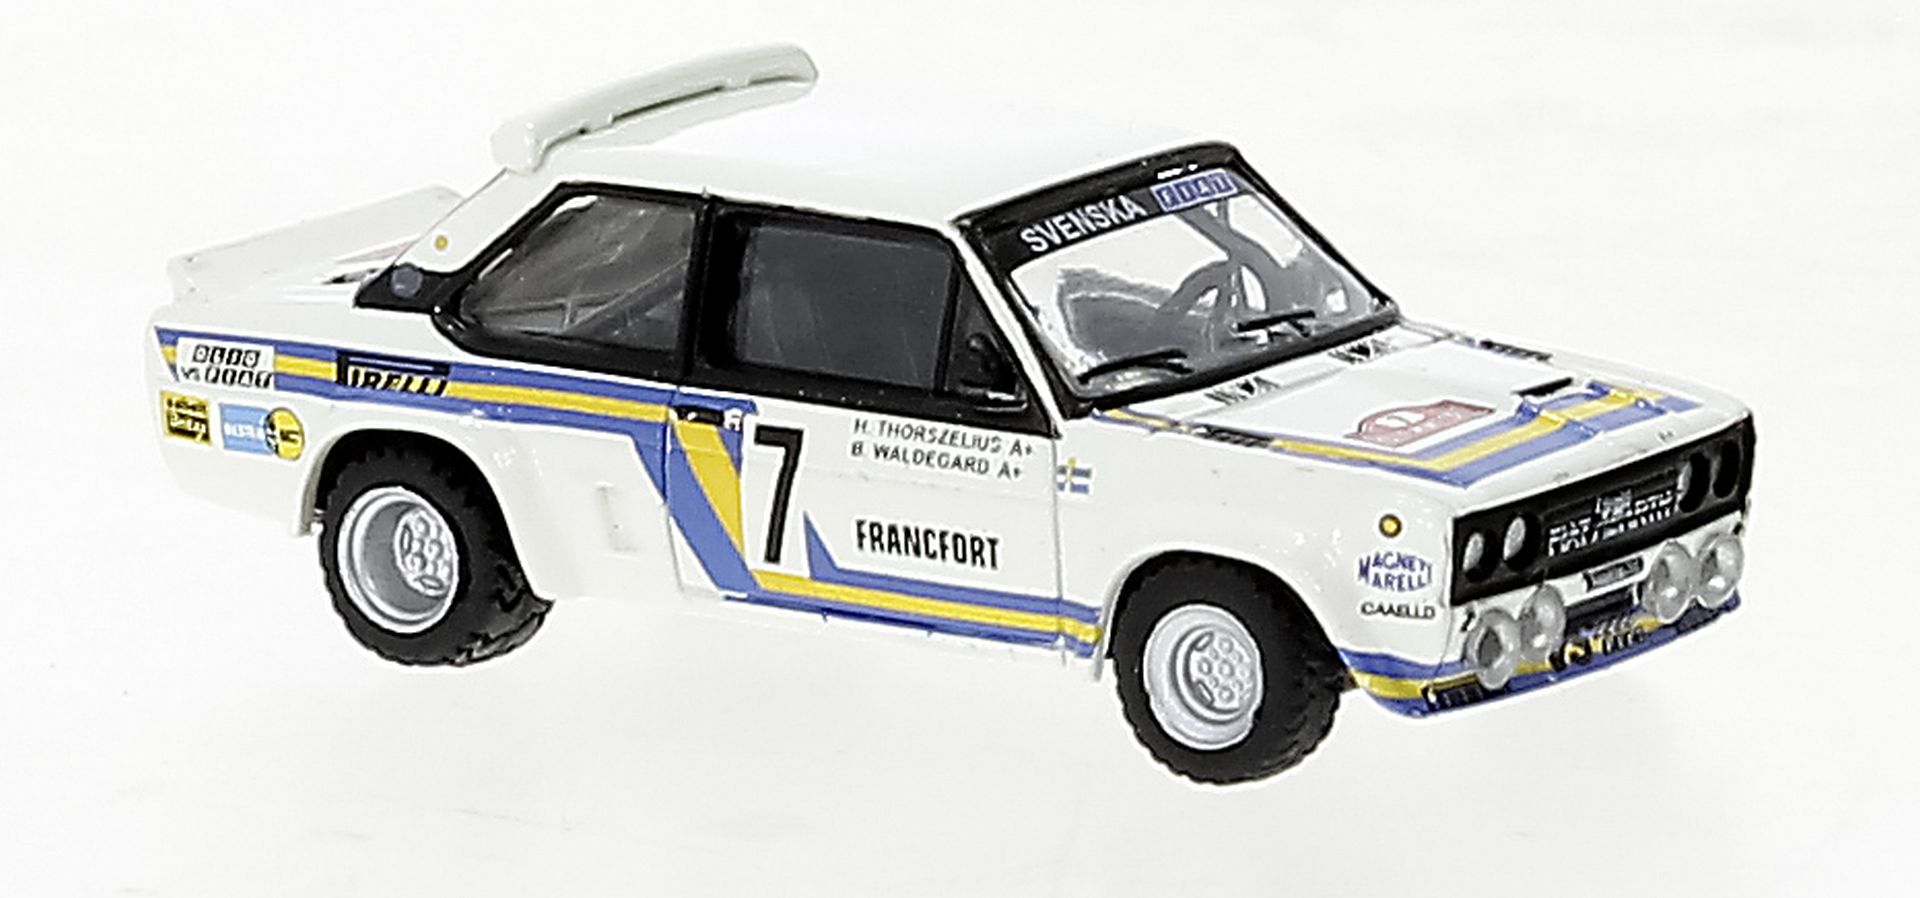 Brekina 22661 - Fiat 131 Abarth, Svenska Fiat, Monte Carlo, B.Waldegaard, 7, 1980